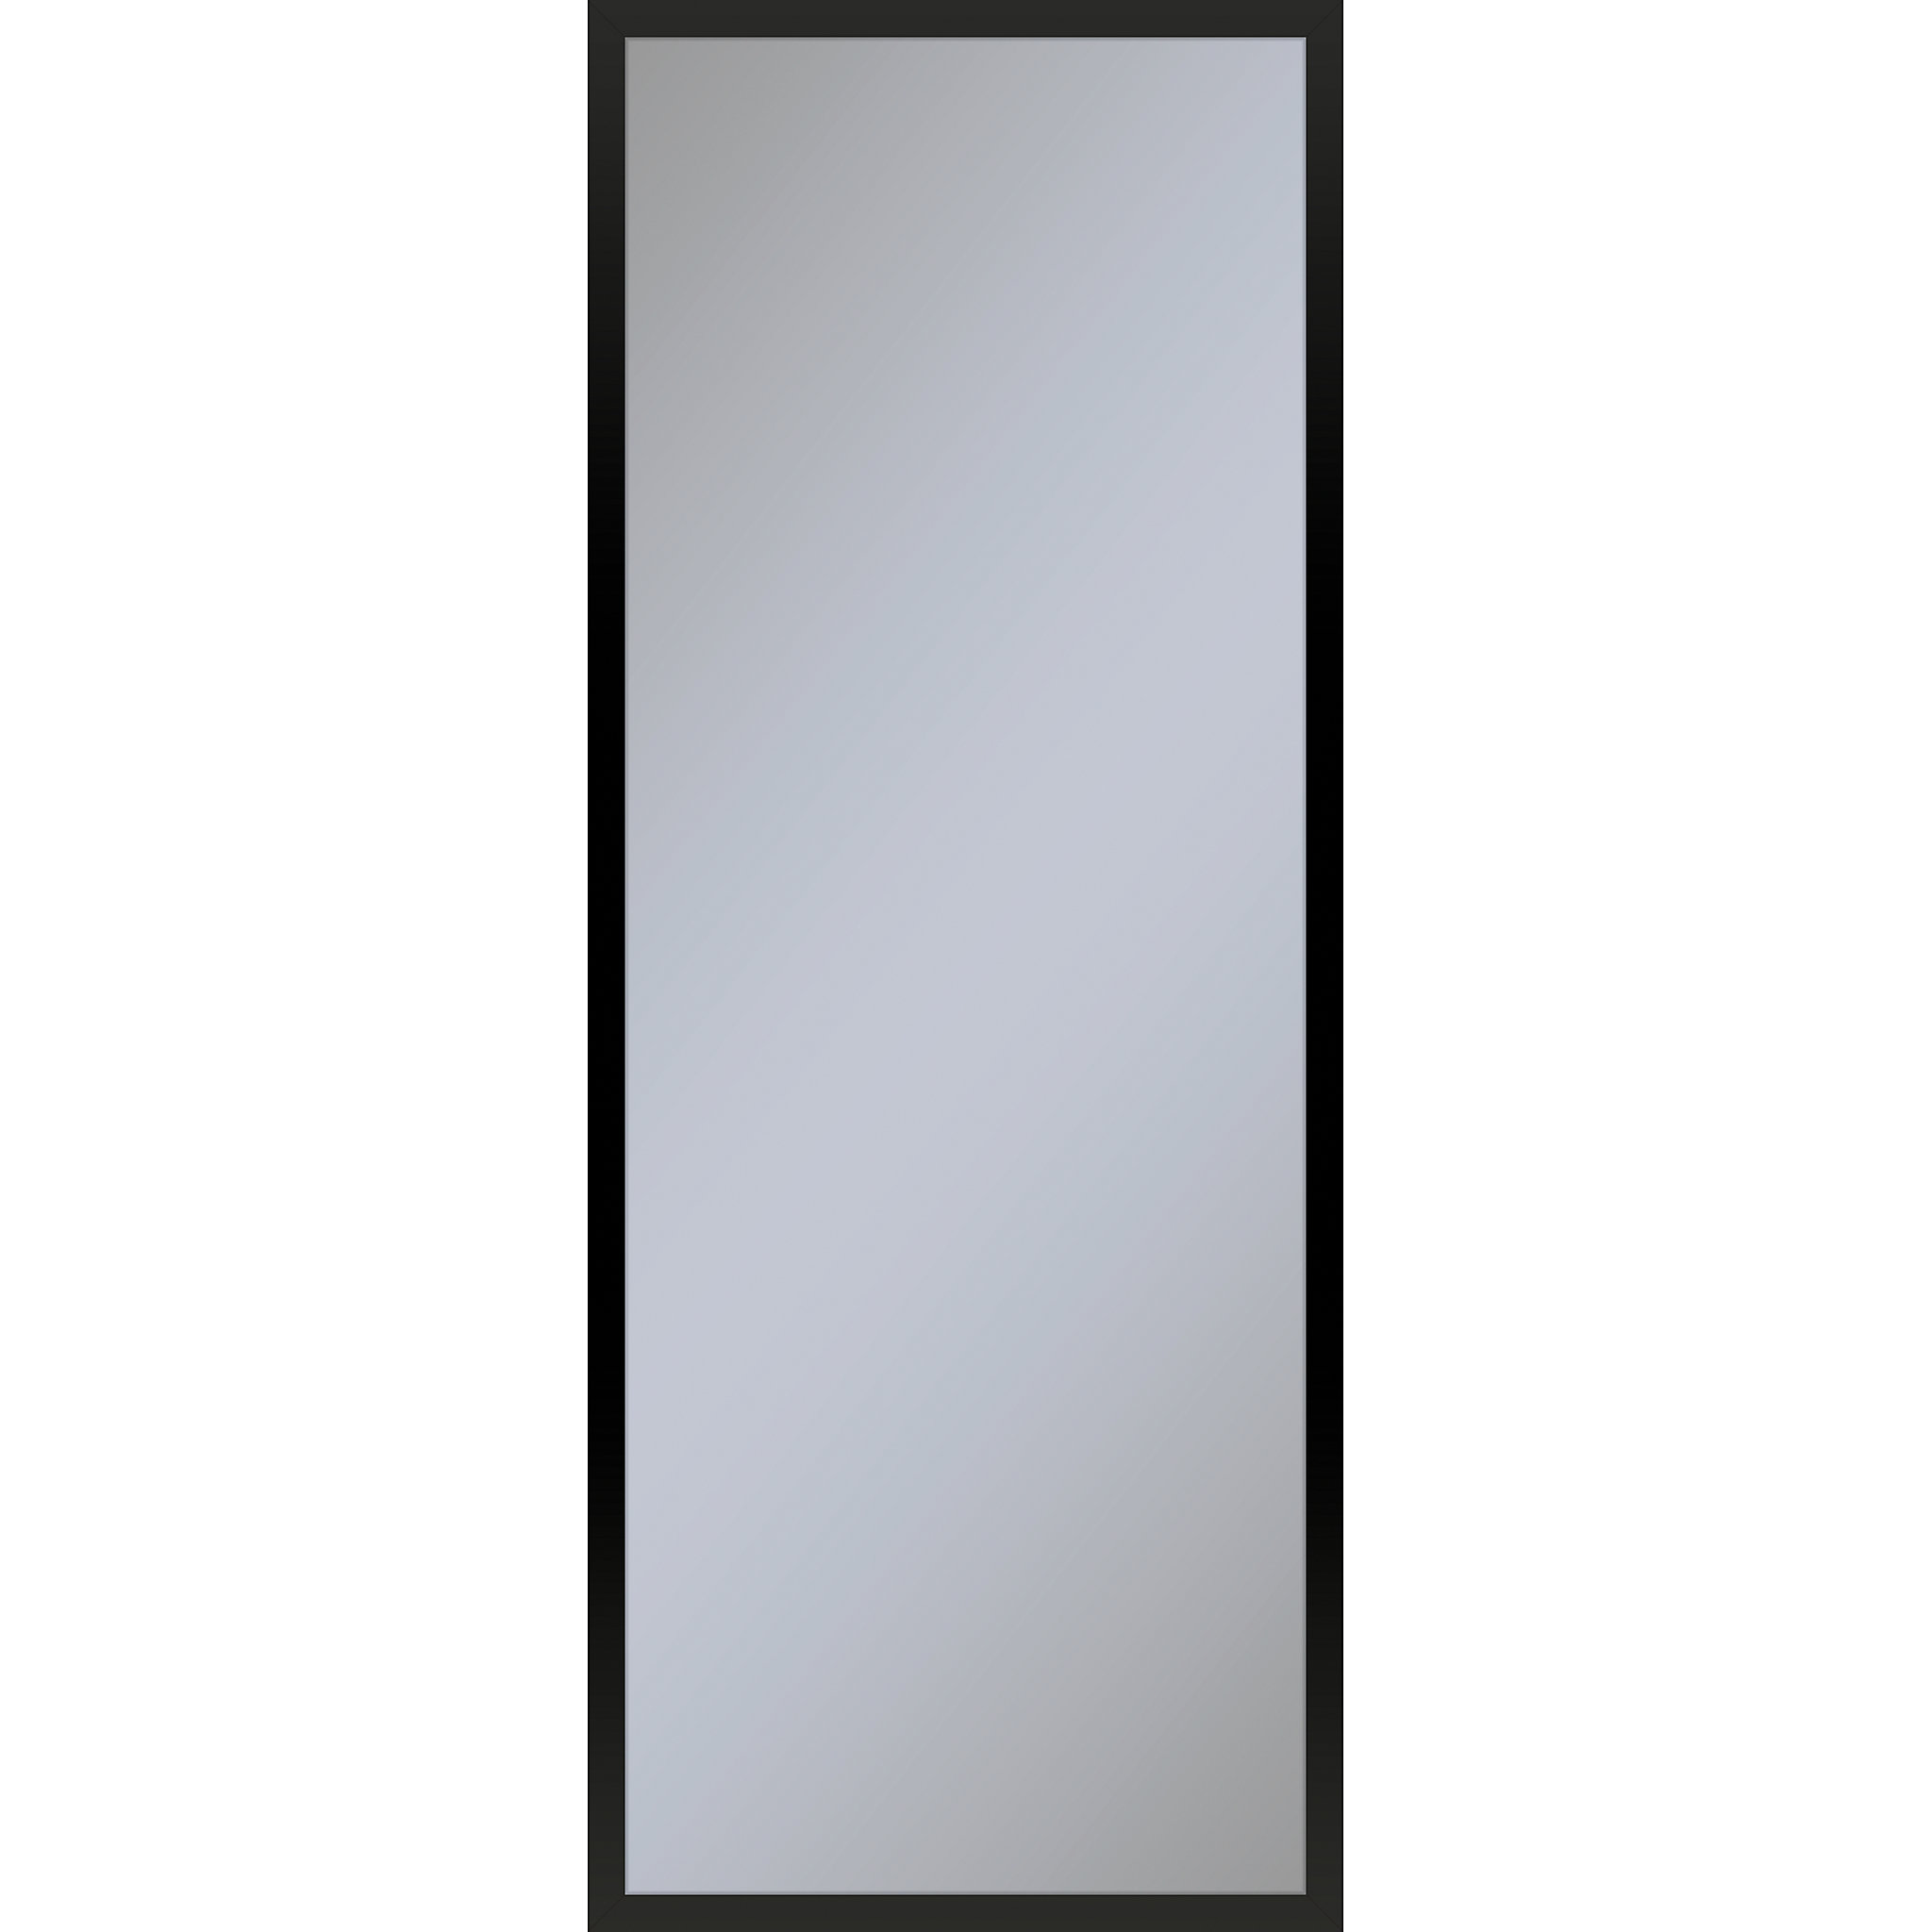 Robern PC1640D6TNN83 Profiles Framed Cabinet, 16" x 40" x 6", Matte Black, Non-Electric, Reversible Hinge